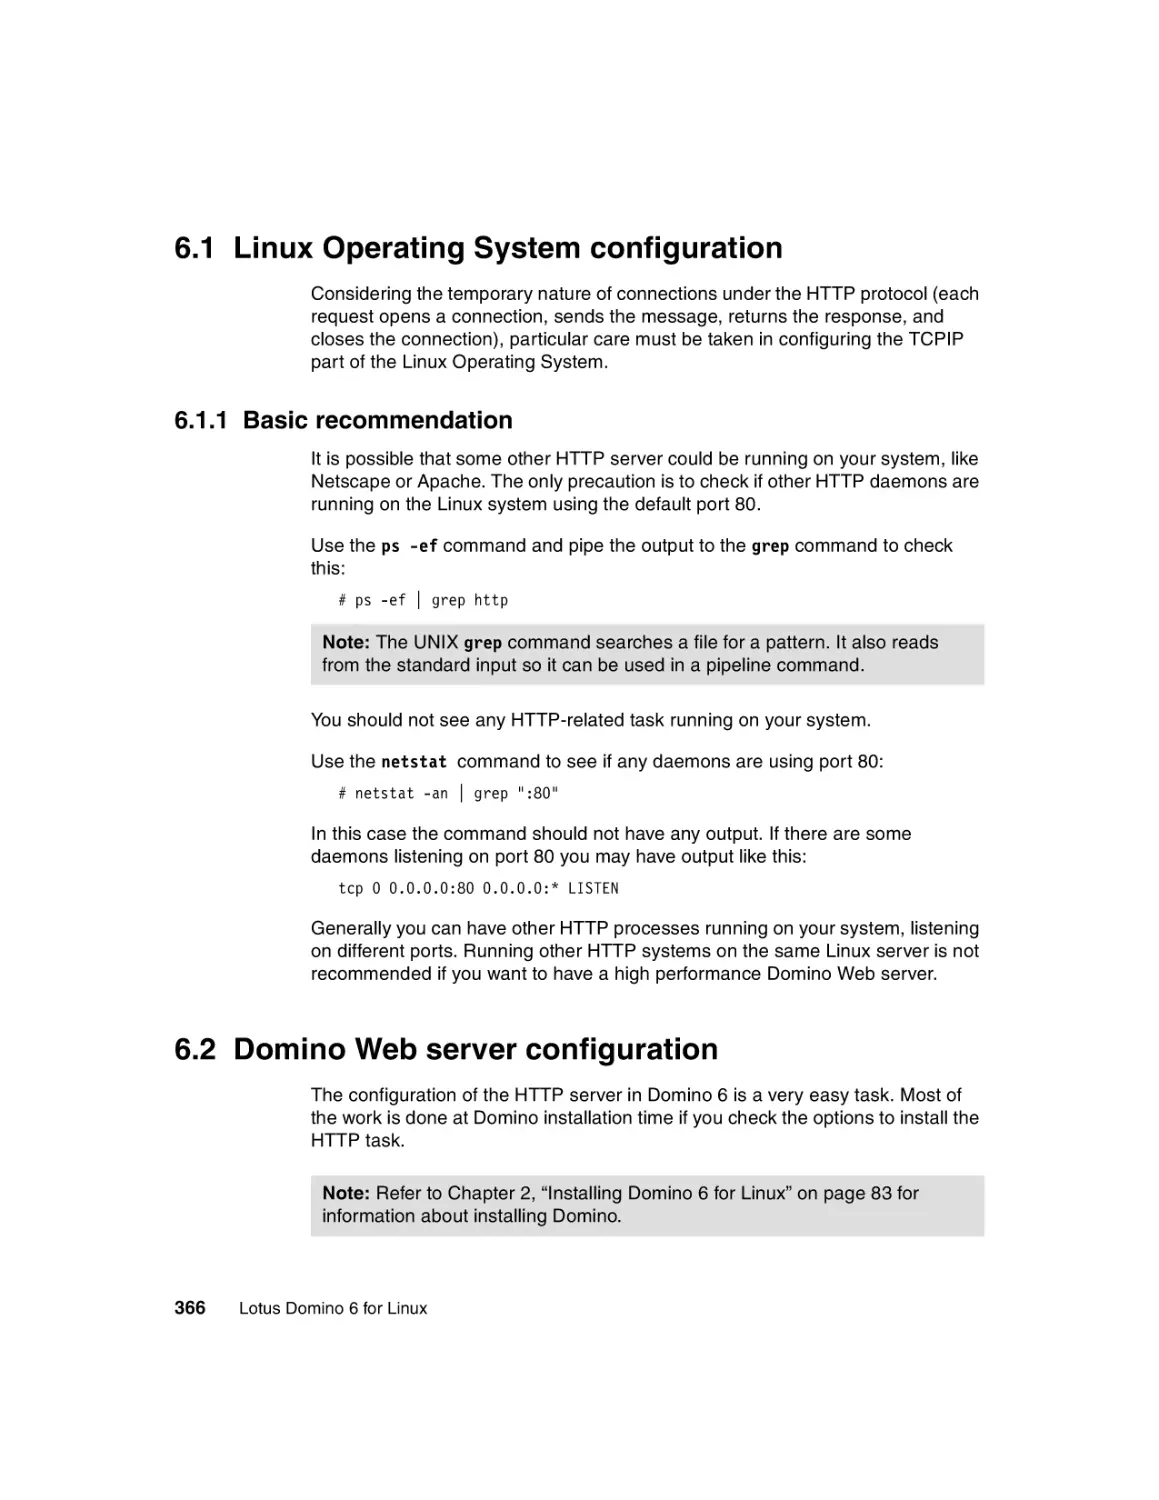 6.1 Linux Operating System configuration
6.1.1 Basic recommendation
6.2 Domino Web server configuration